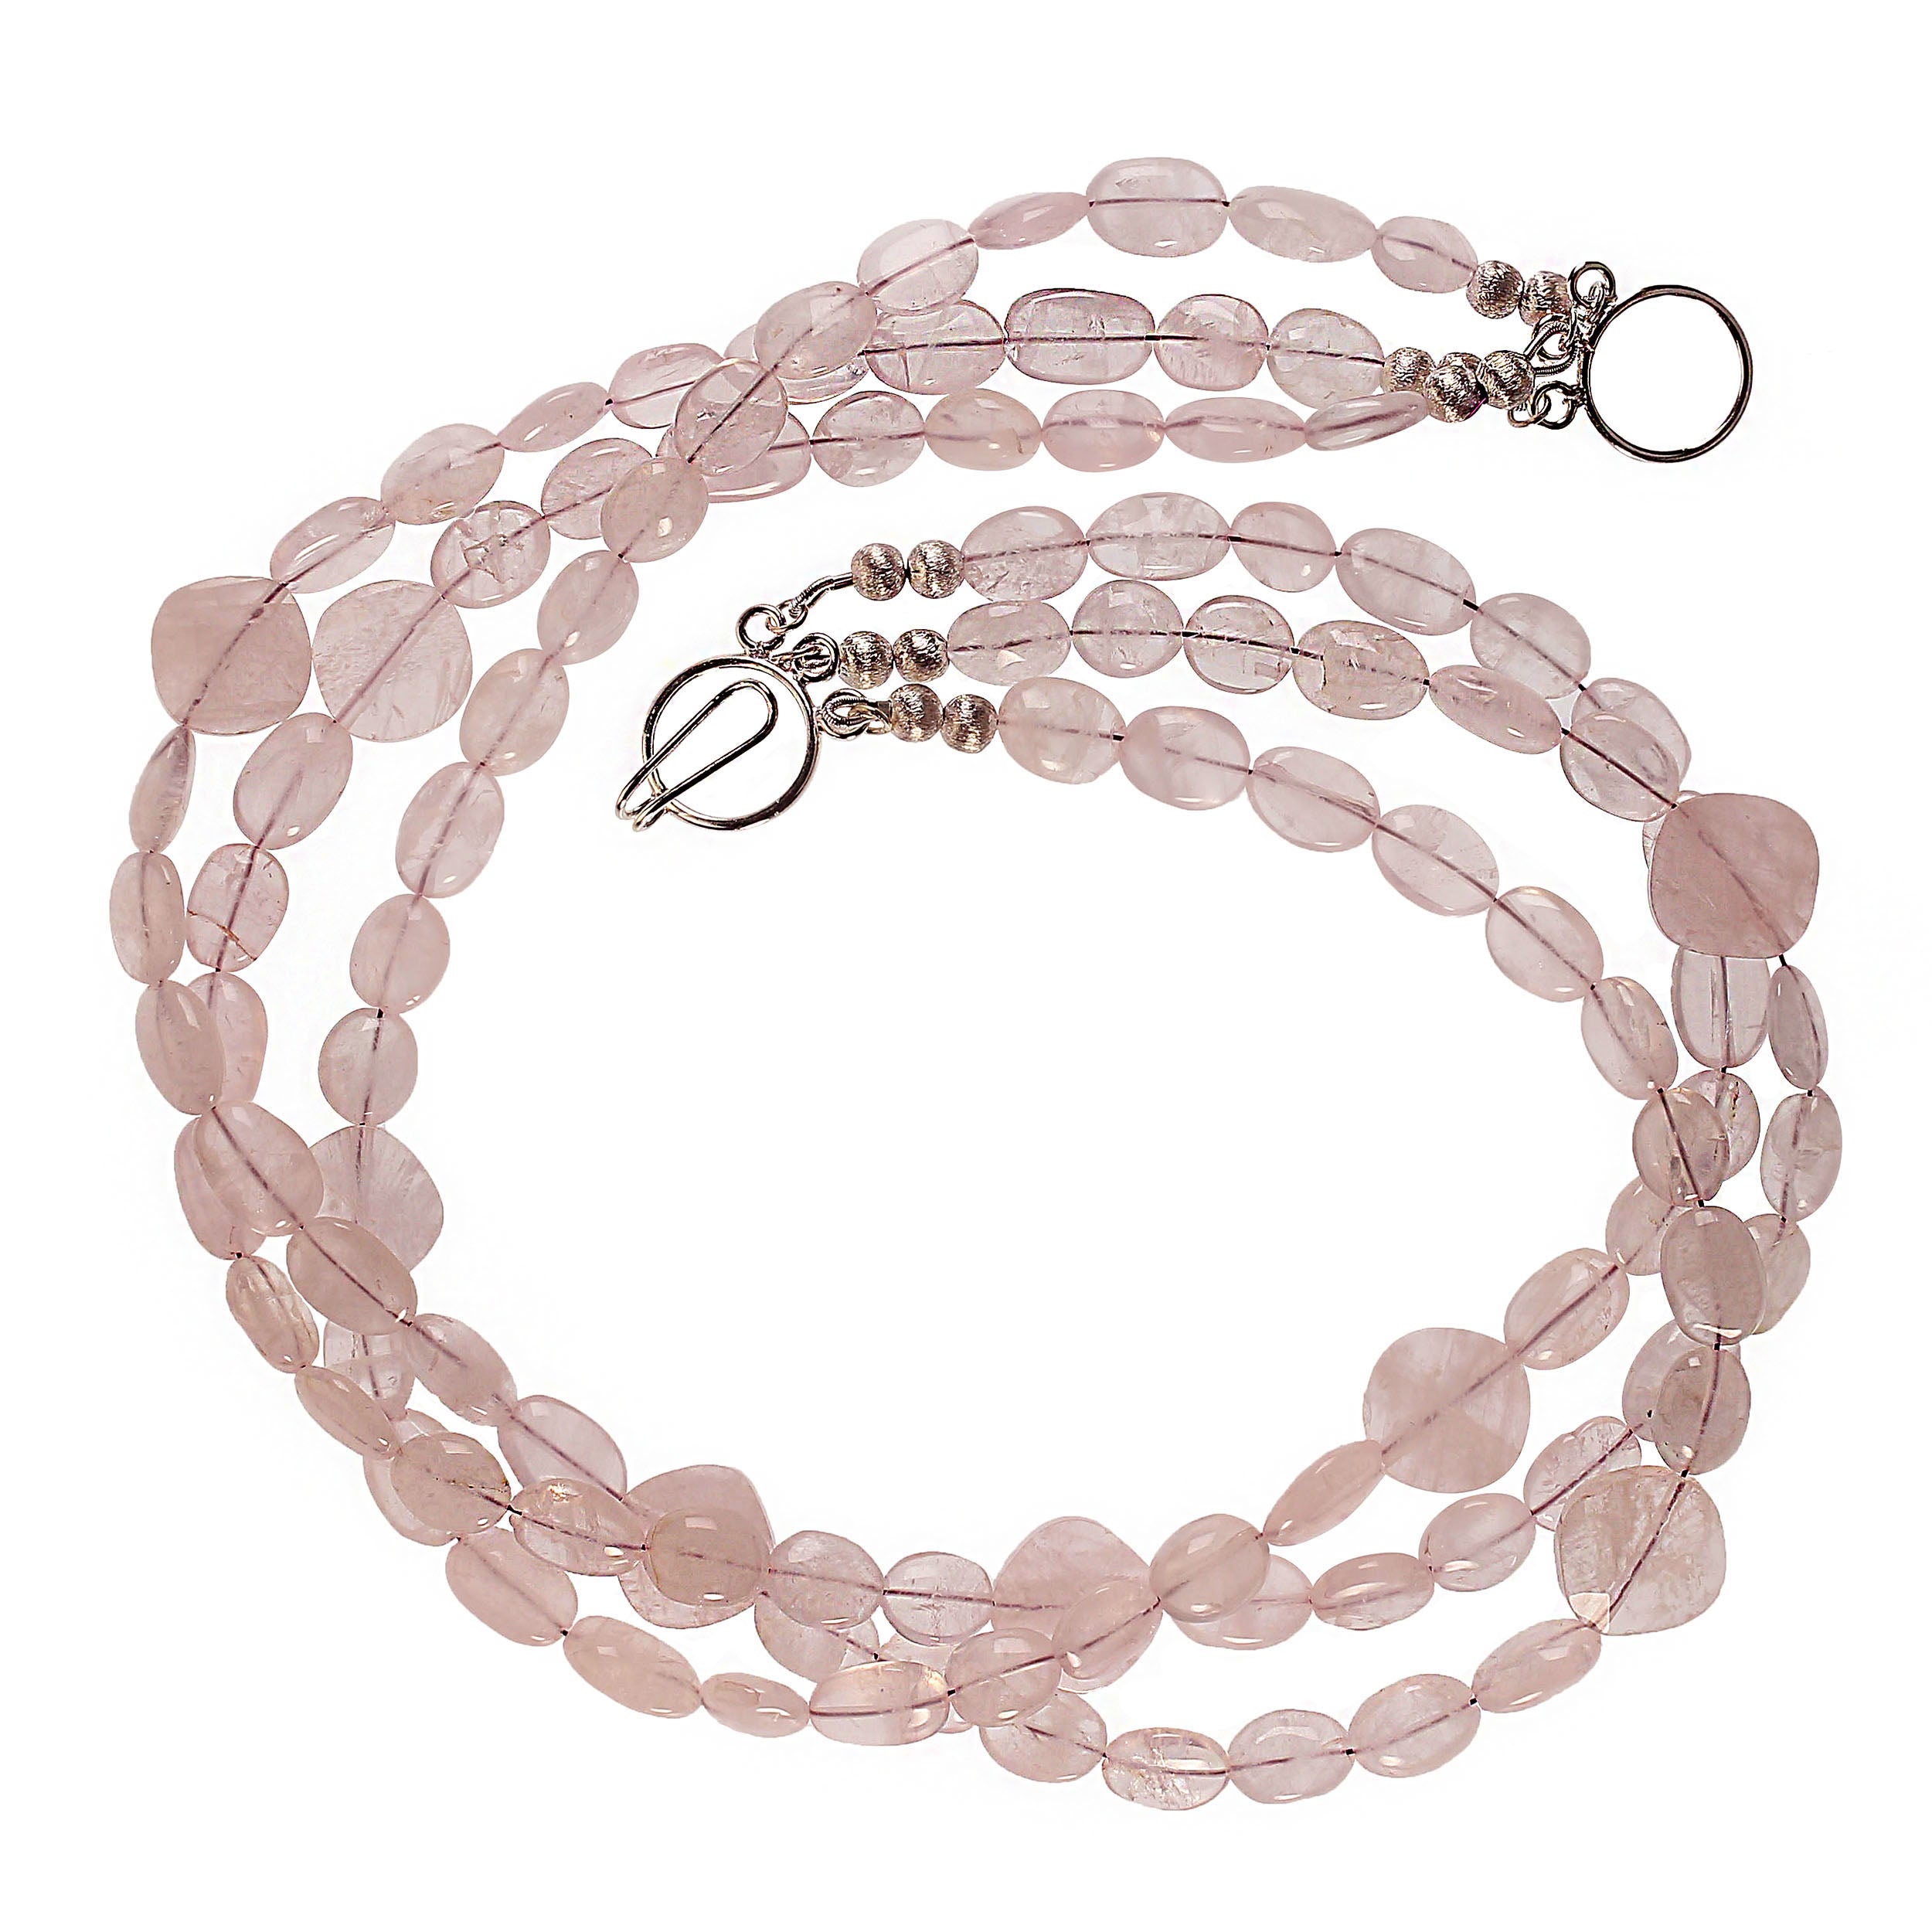 AJD 19 Inch Three strand  Glowing Rose Quartz necklace